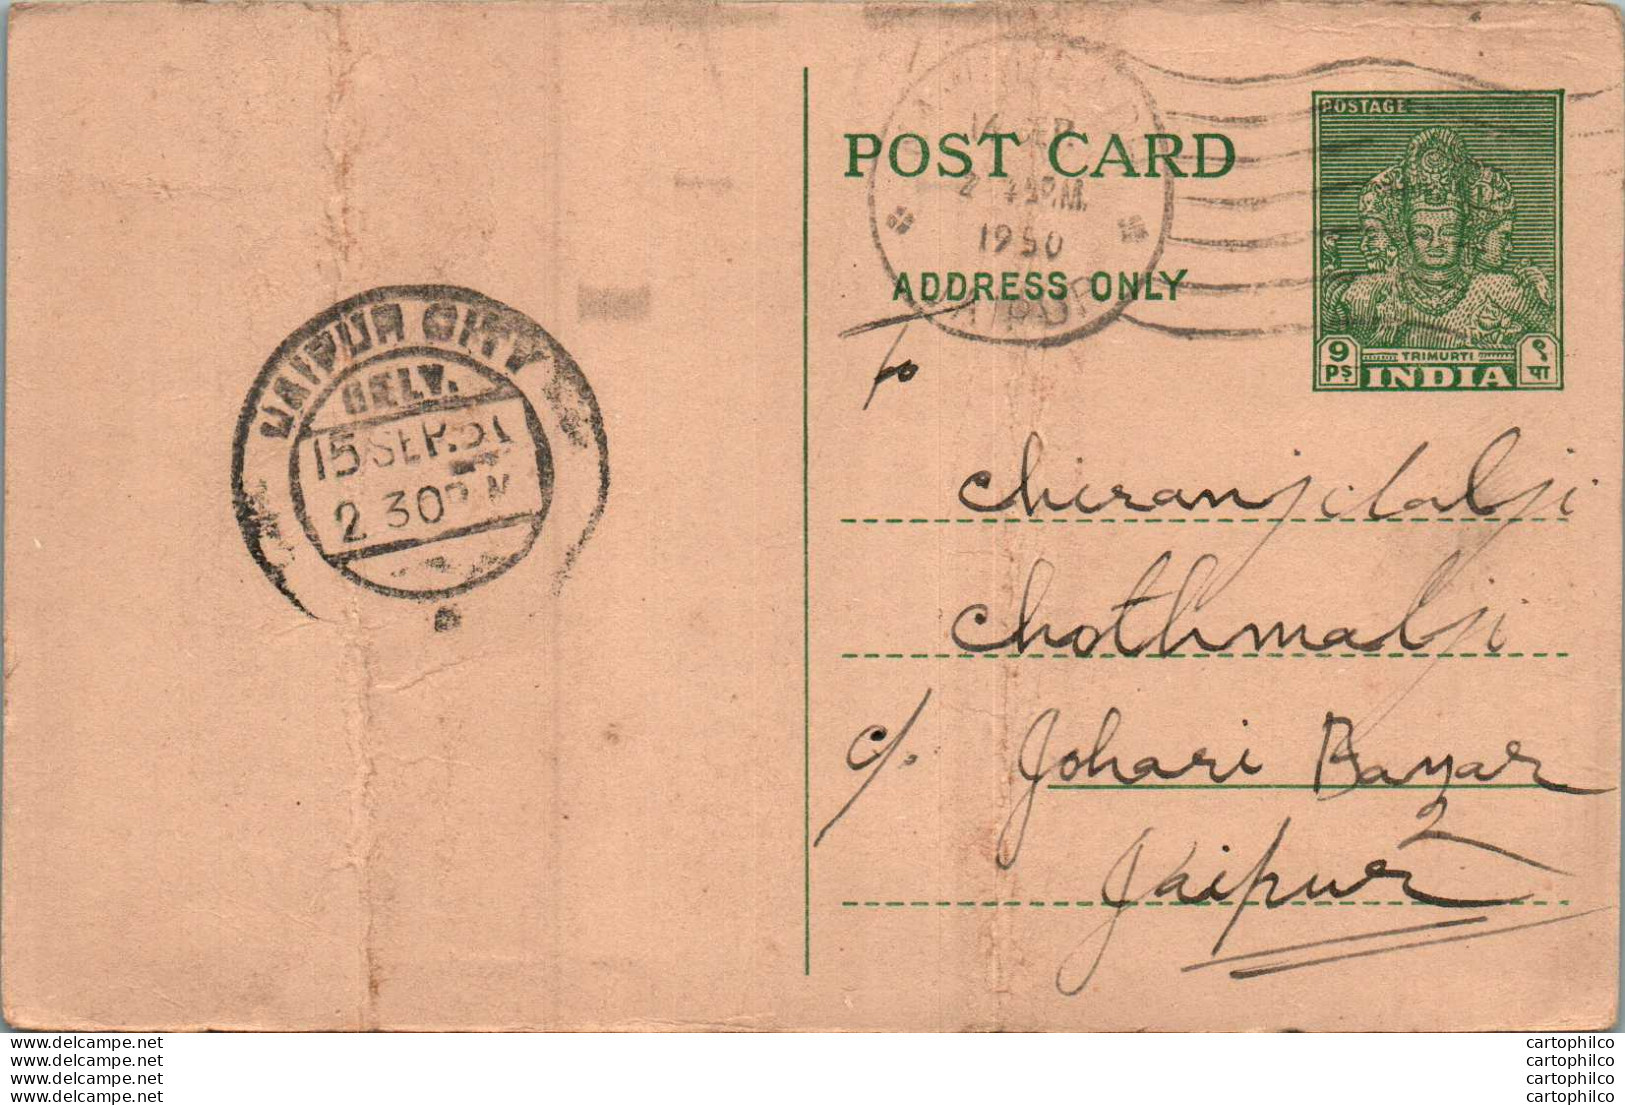 India Postal Stationery 9p Jaipur Cds - Postcards